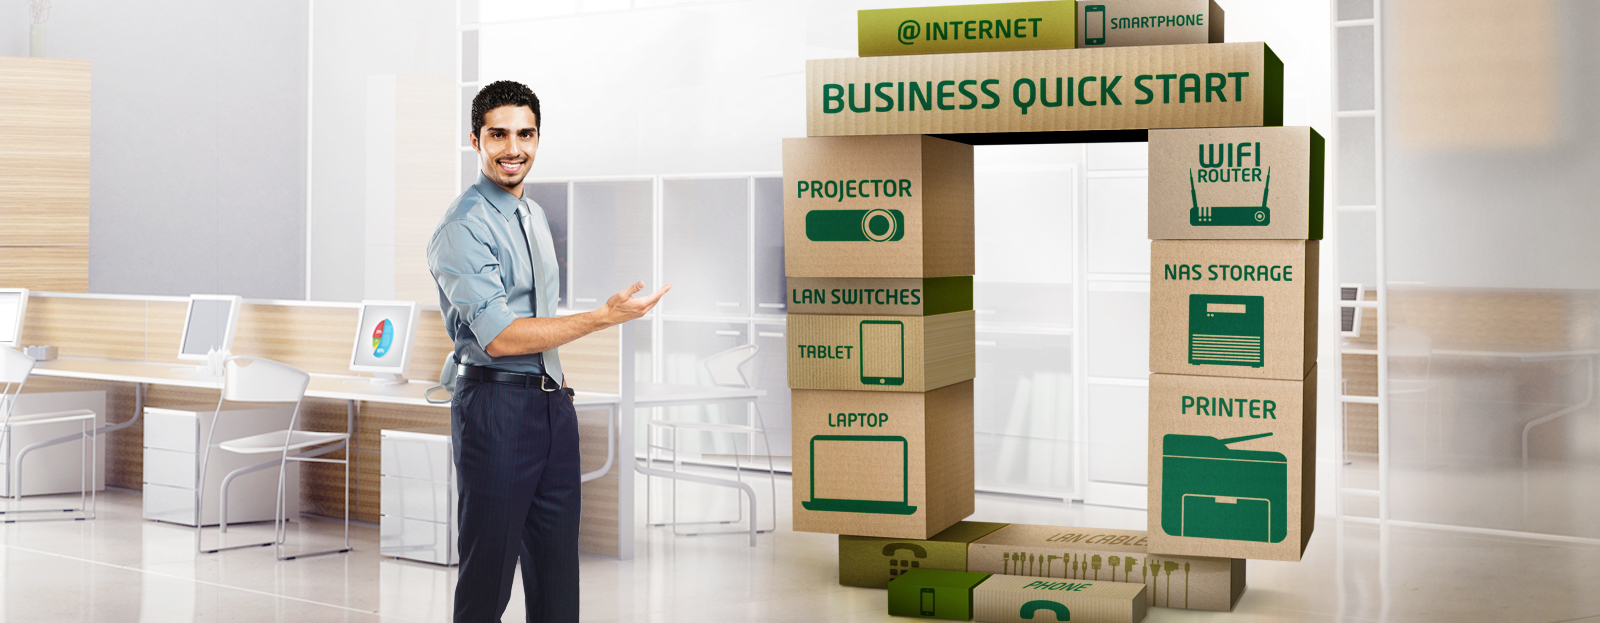 Etisalat Business Quick Start Services